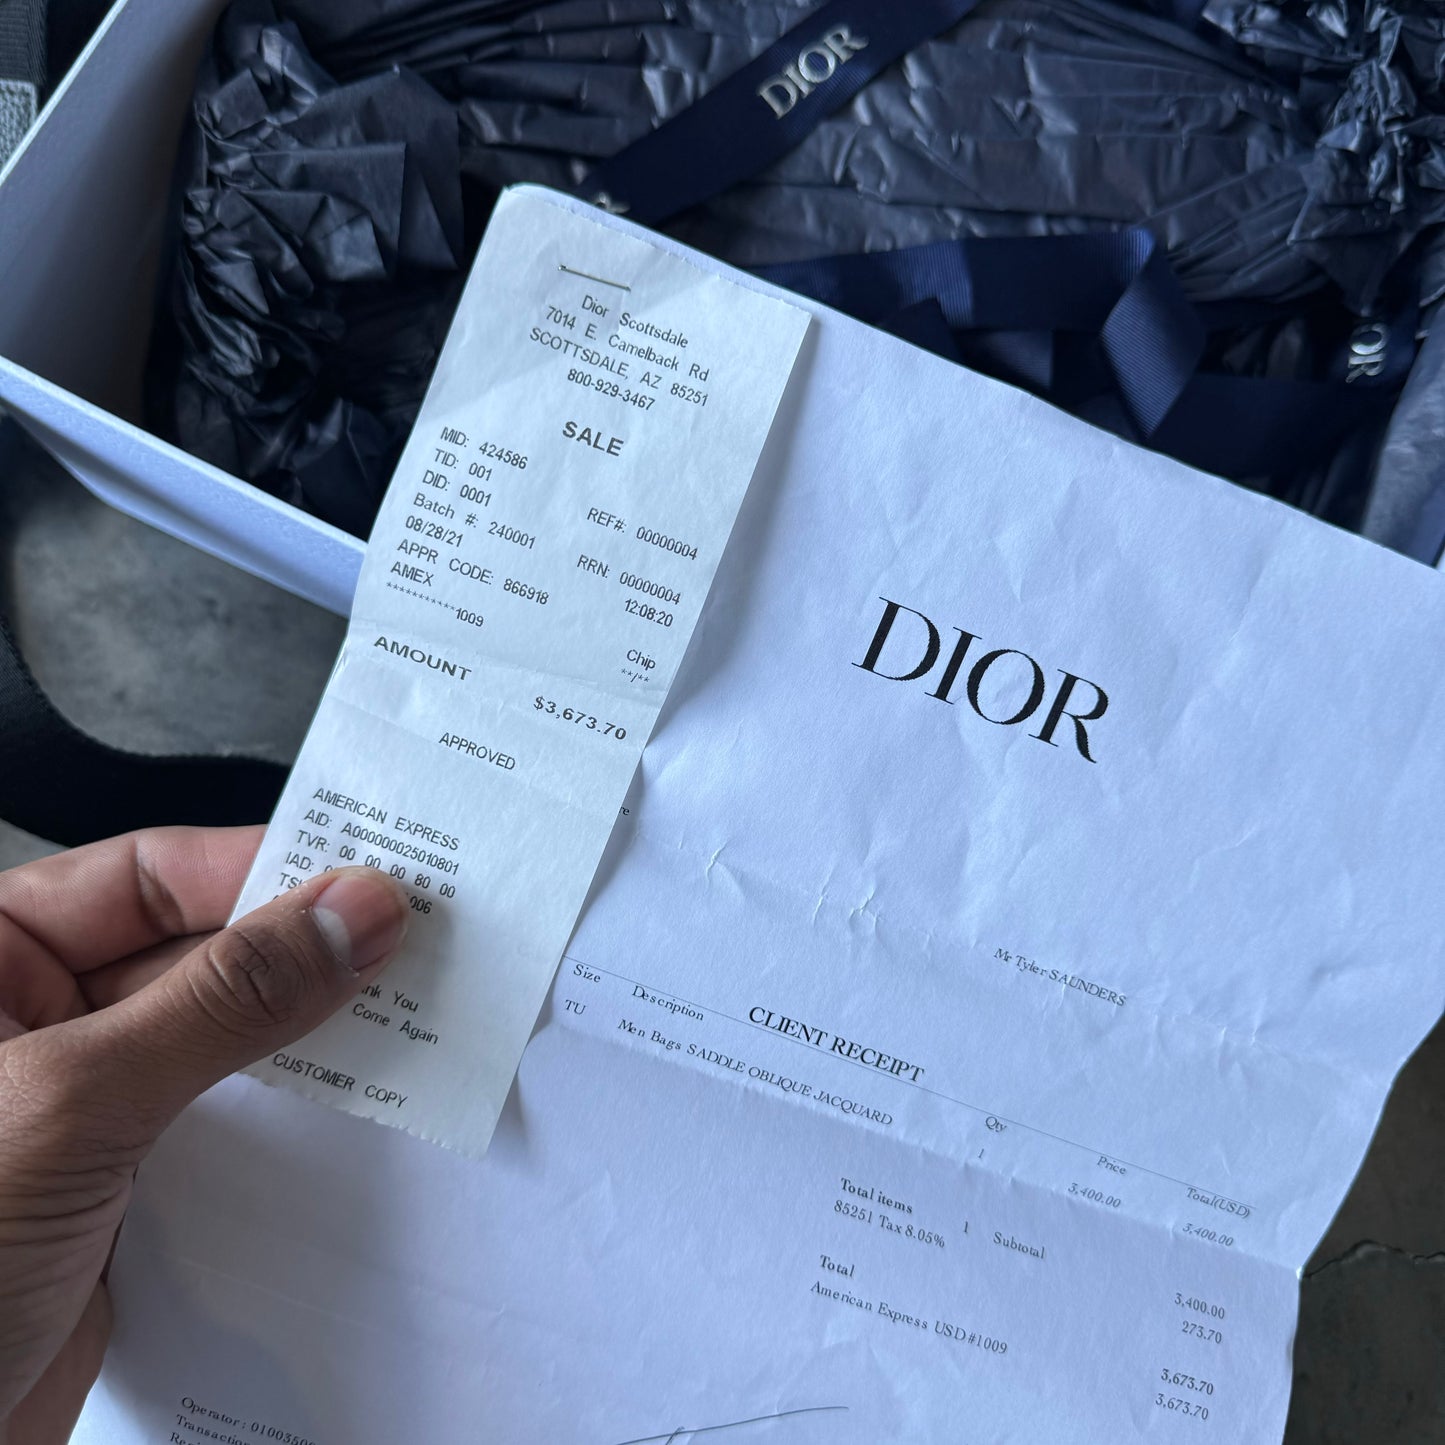 Dior Saddlebag